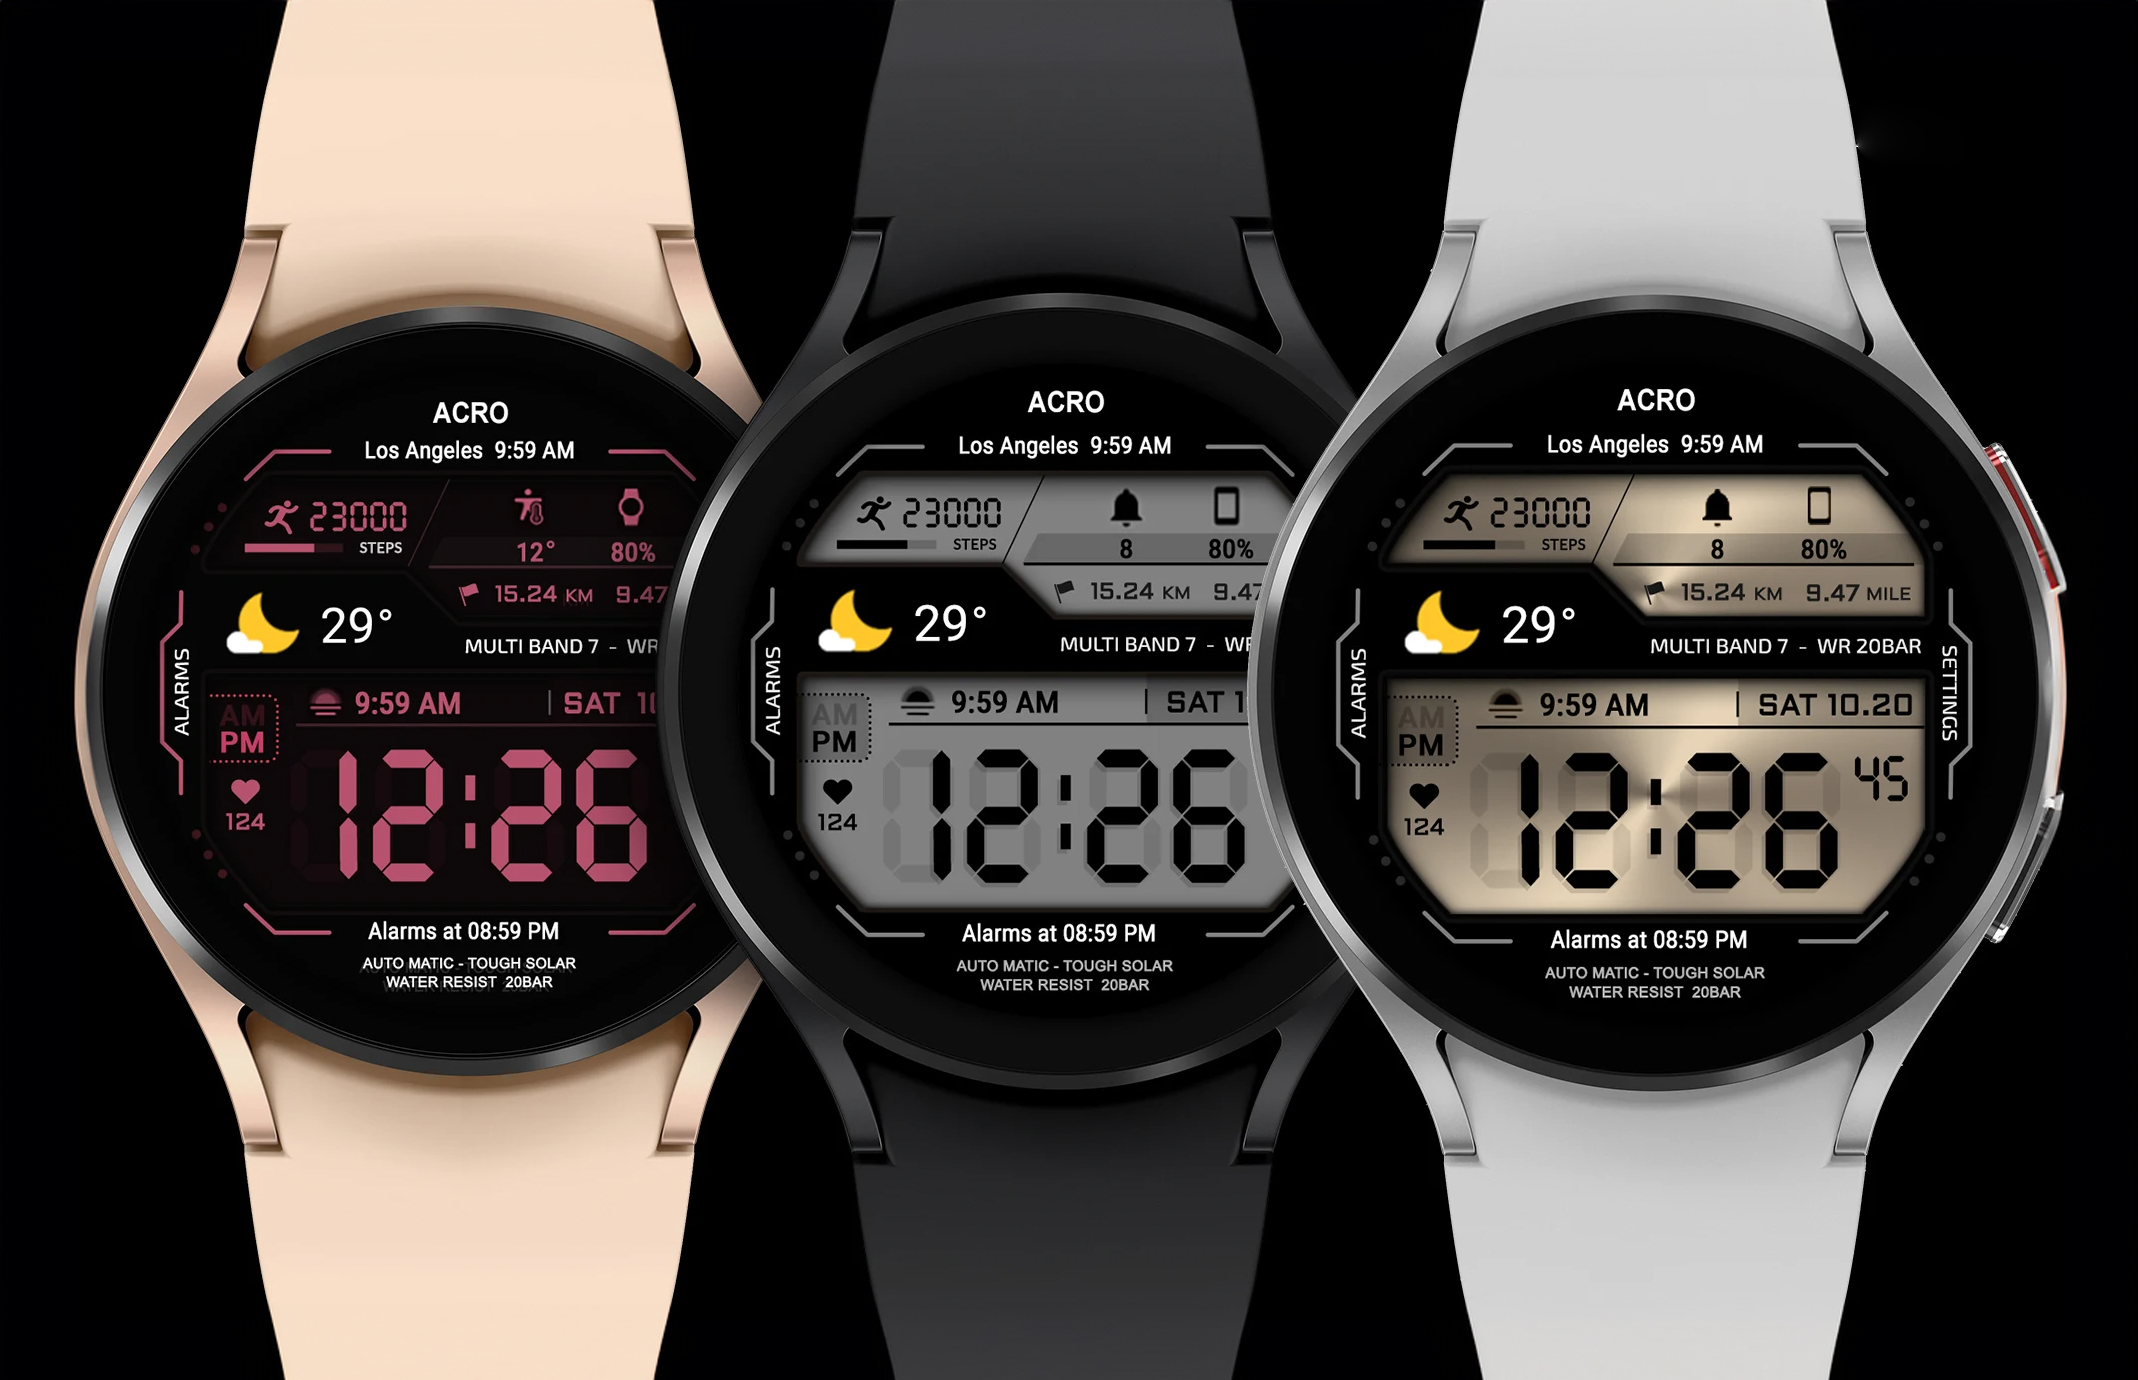 ACRO Wear OS watch face for Samsung Galaxy Watch.